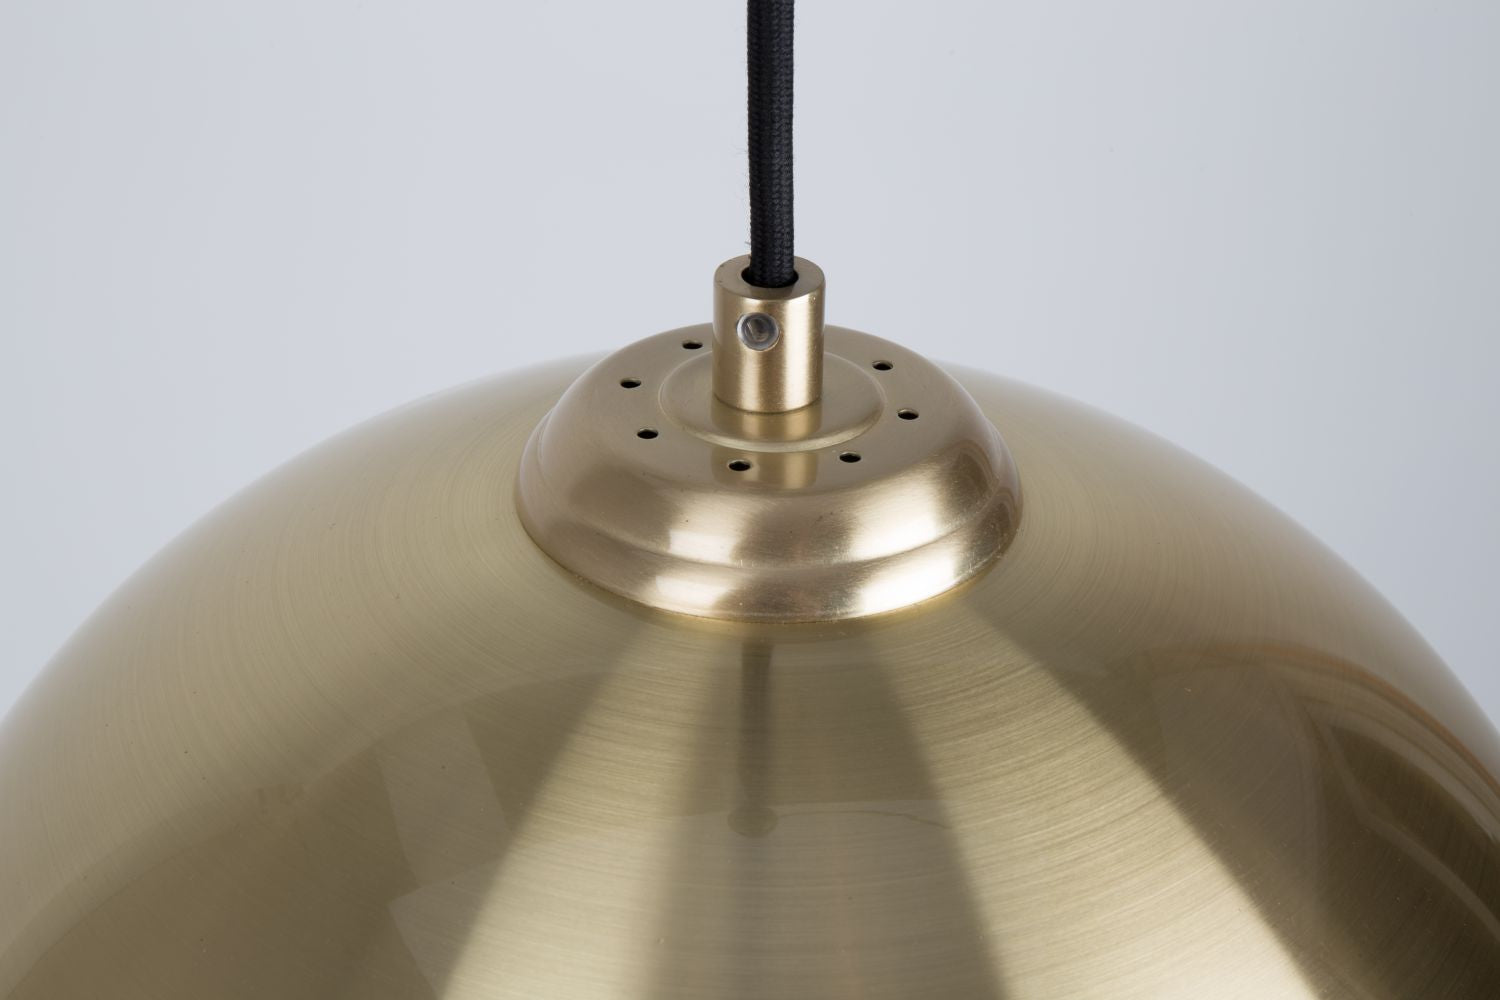  Zuiver-Zuiver Big Glow Pendant Lamp Brass-Brass 37 